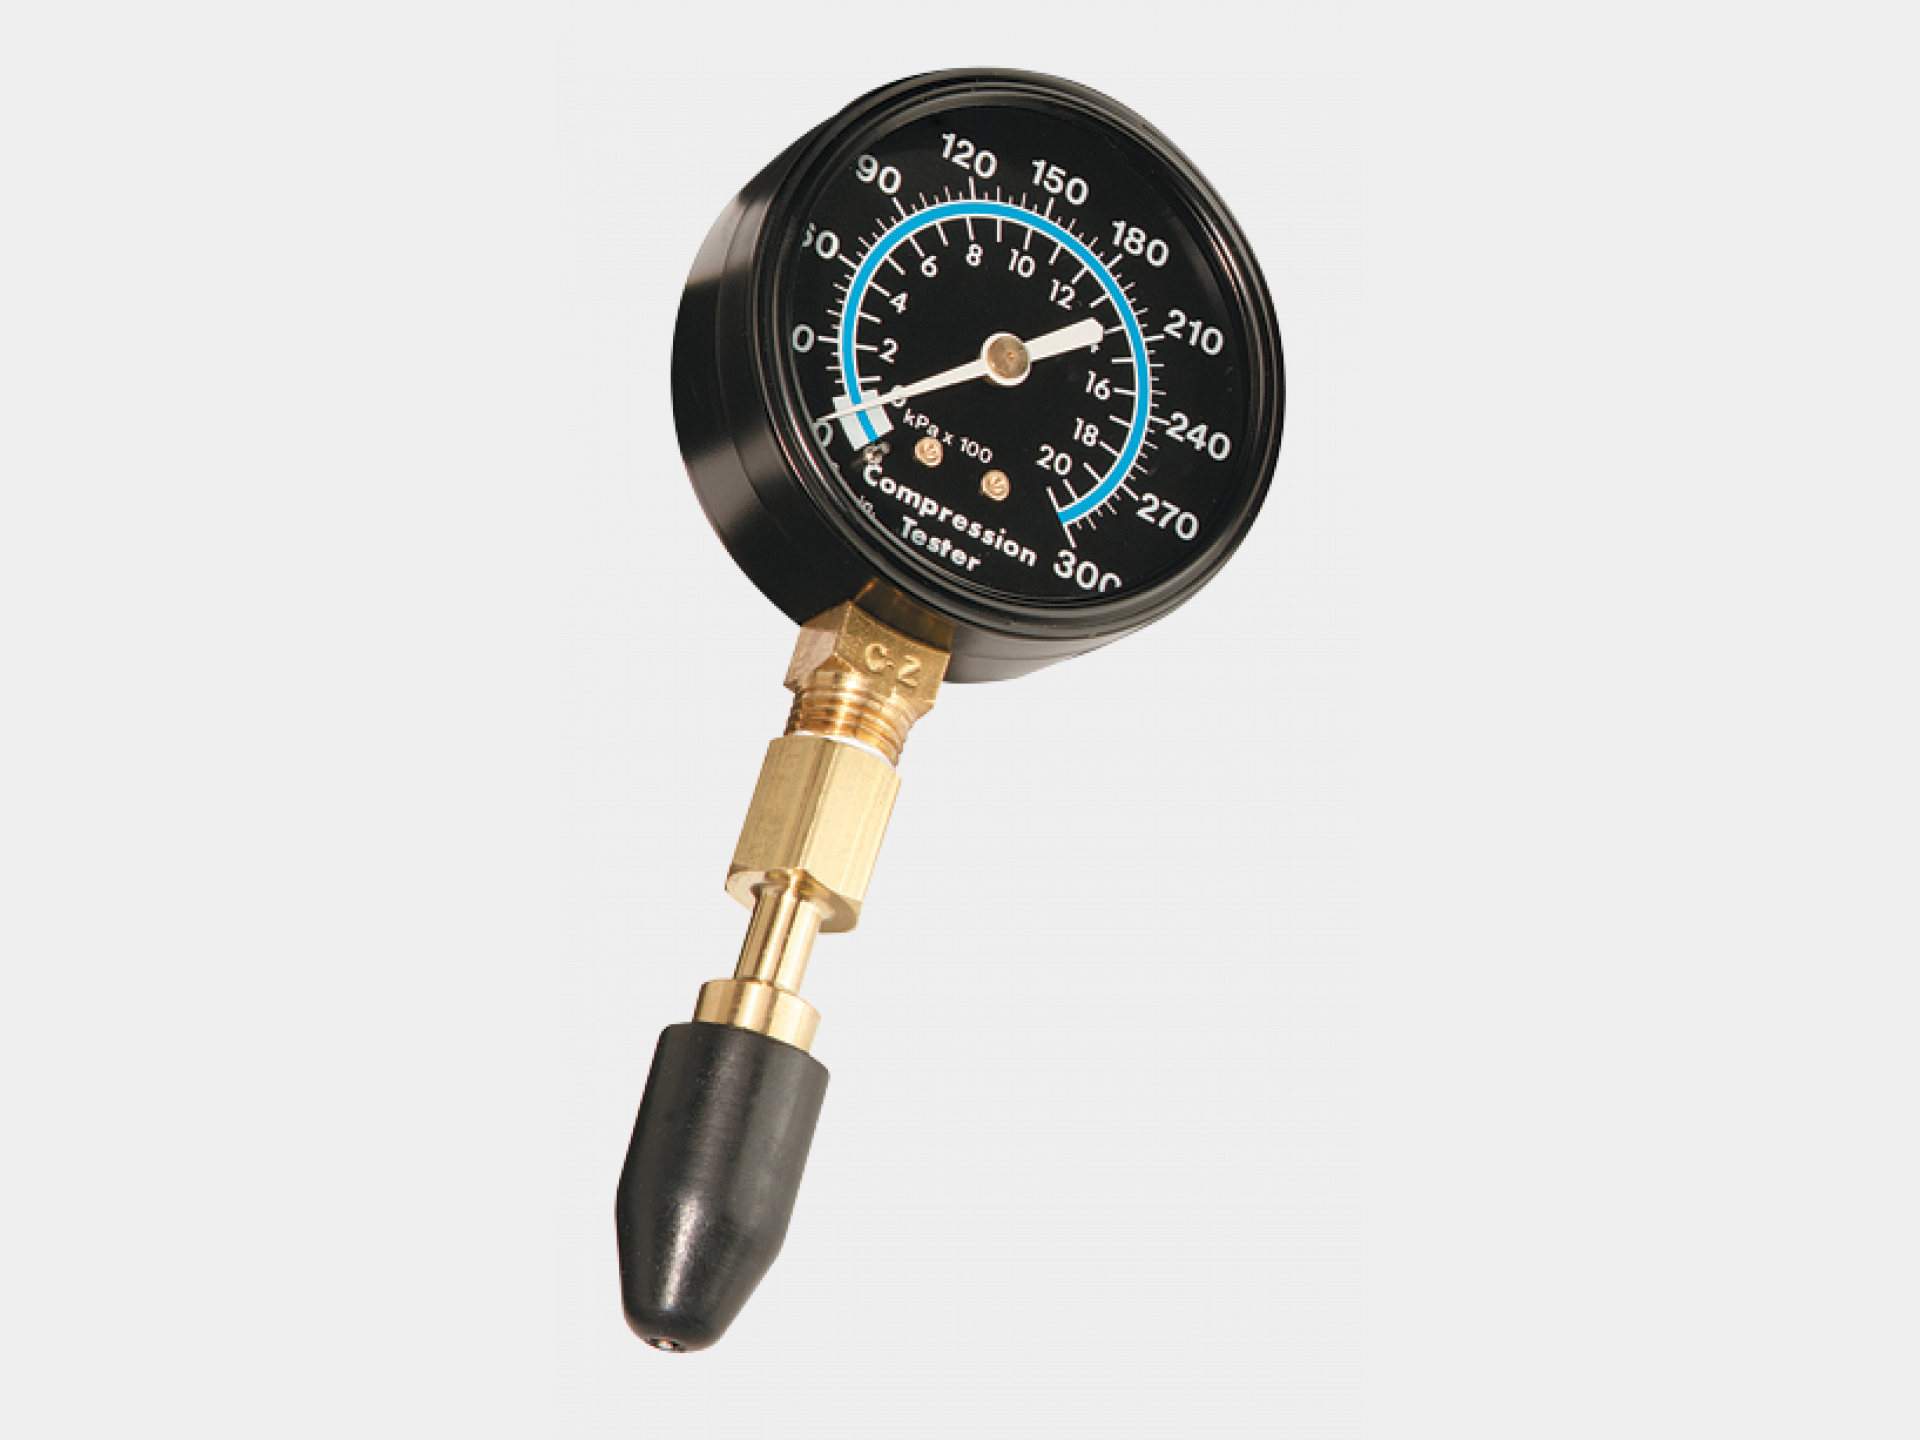 2-½” Compression Tester  Actron External Pressure Valve